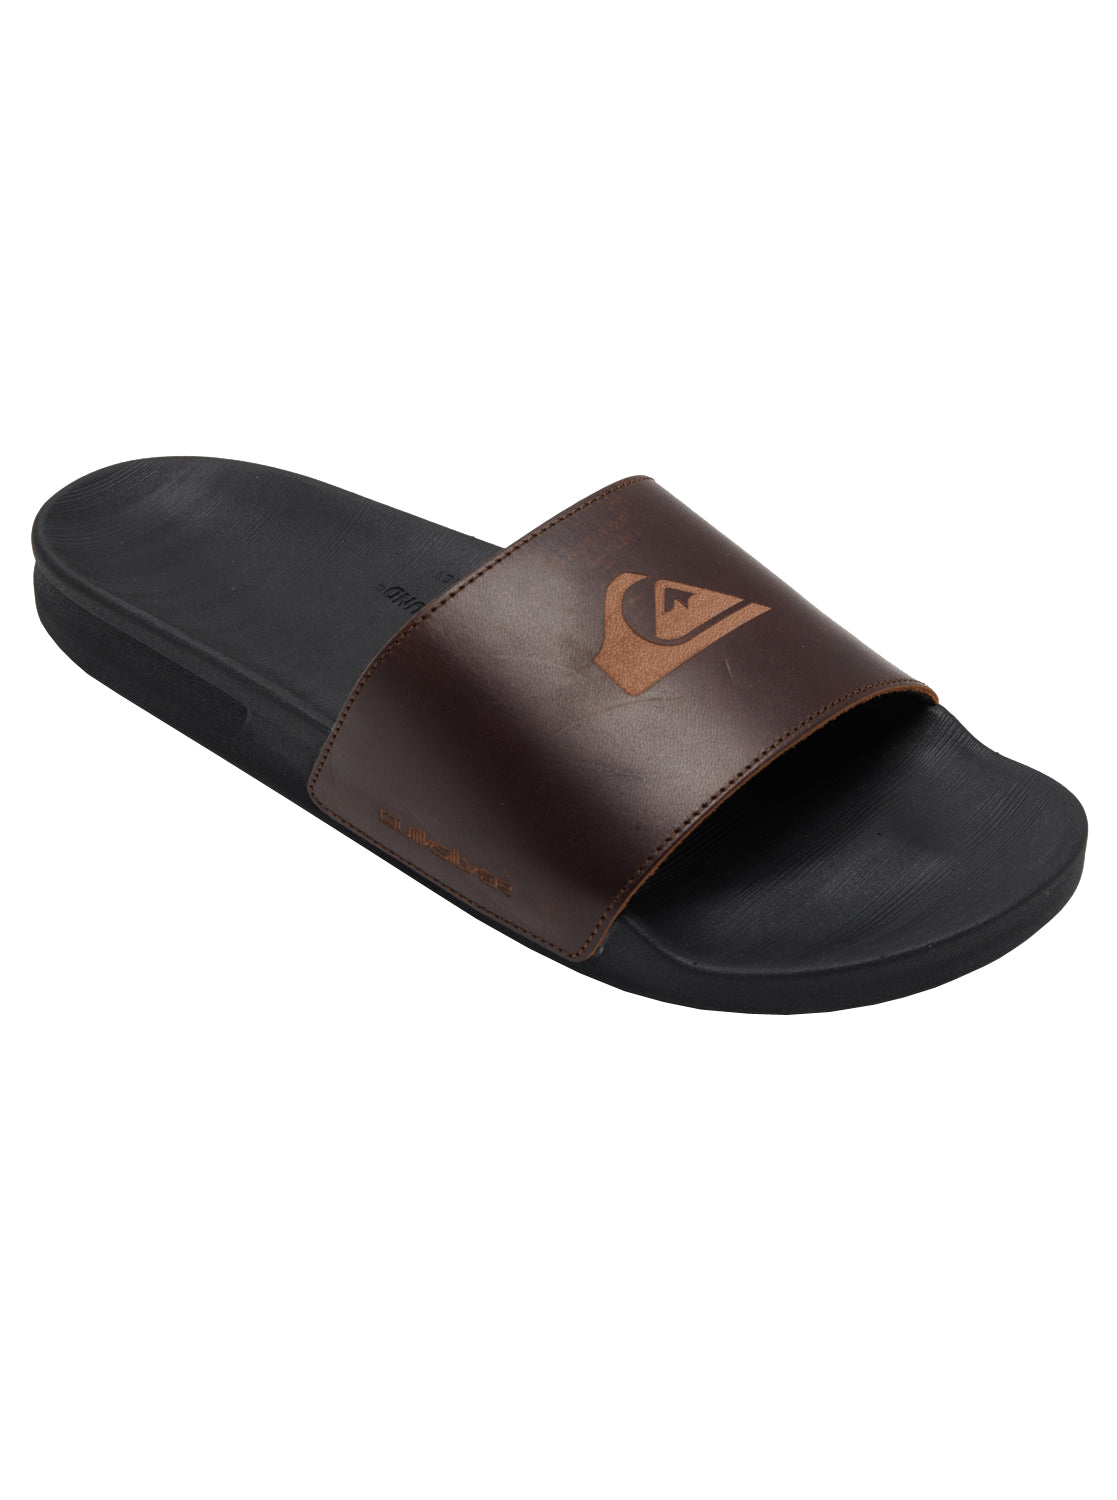 Quiksilver Rivi Leather Slide Mens Sandal